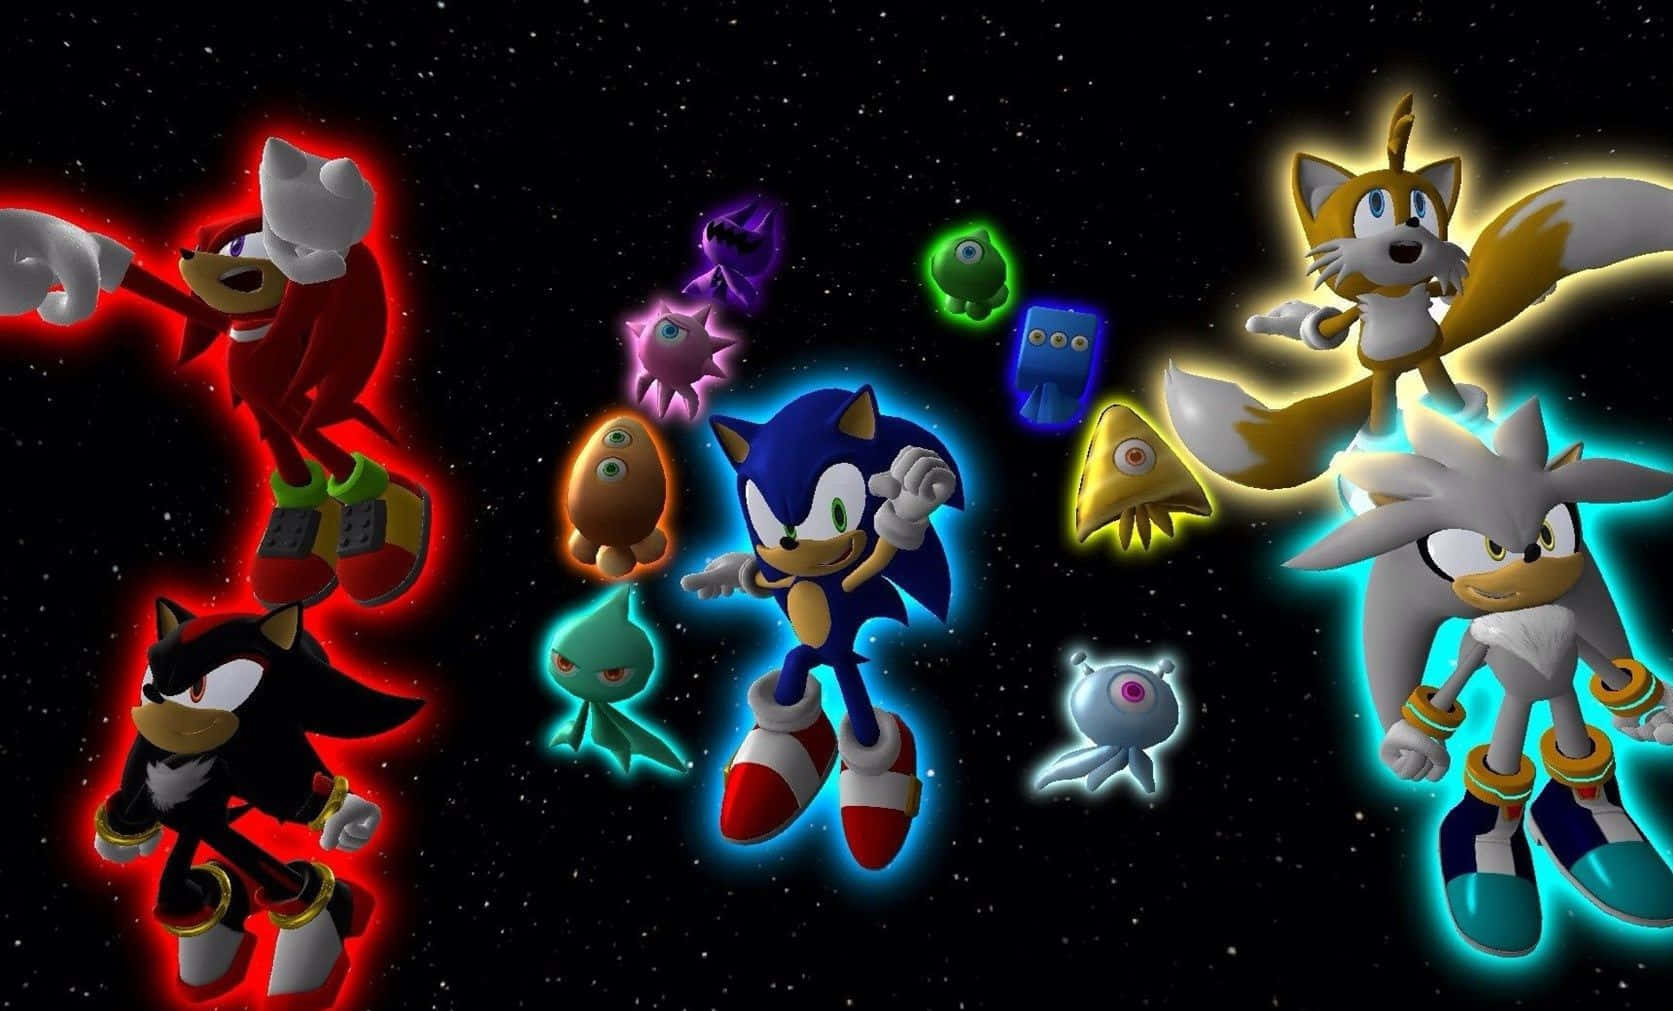 Sonic The Hedgehog returns in 4k Wallpaper